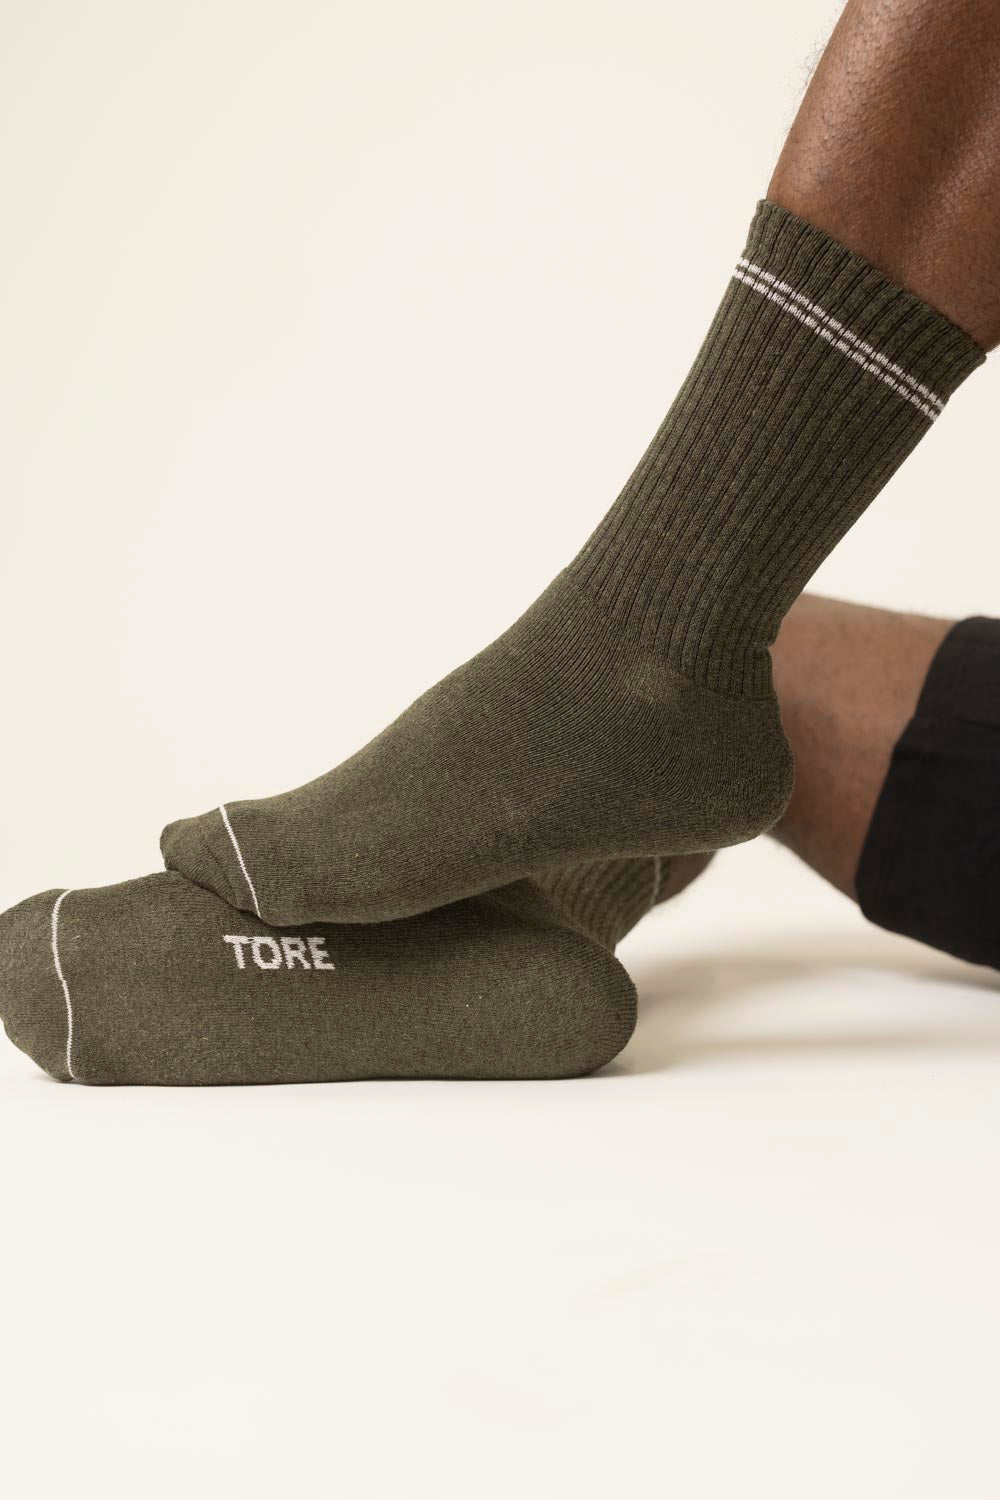 TORE 3Pk 100% Recycled Plain Crew Sports Socks - Men's